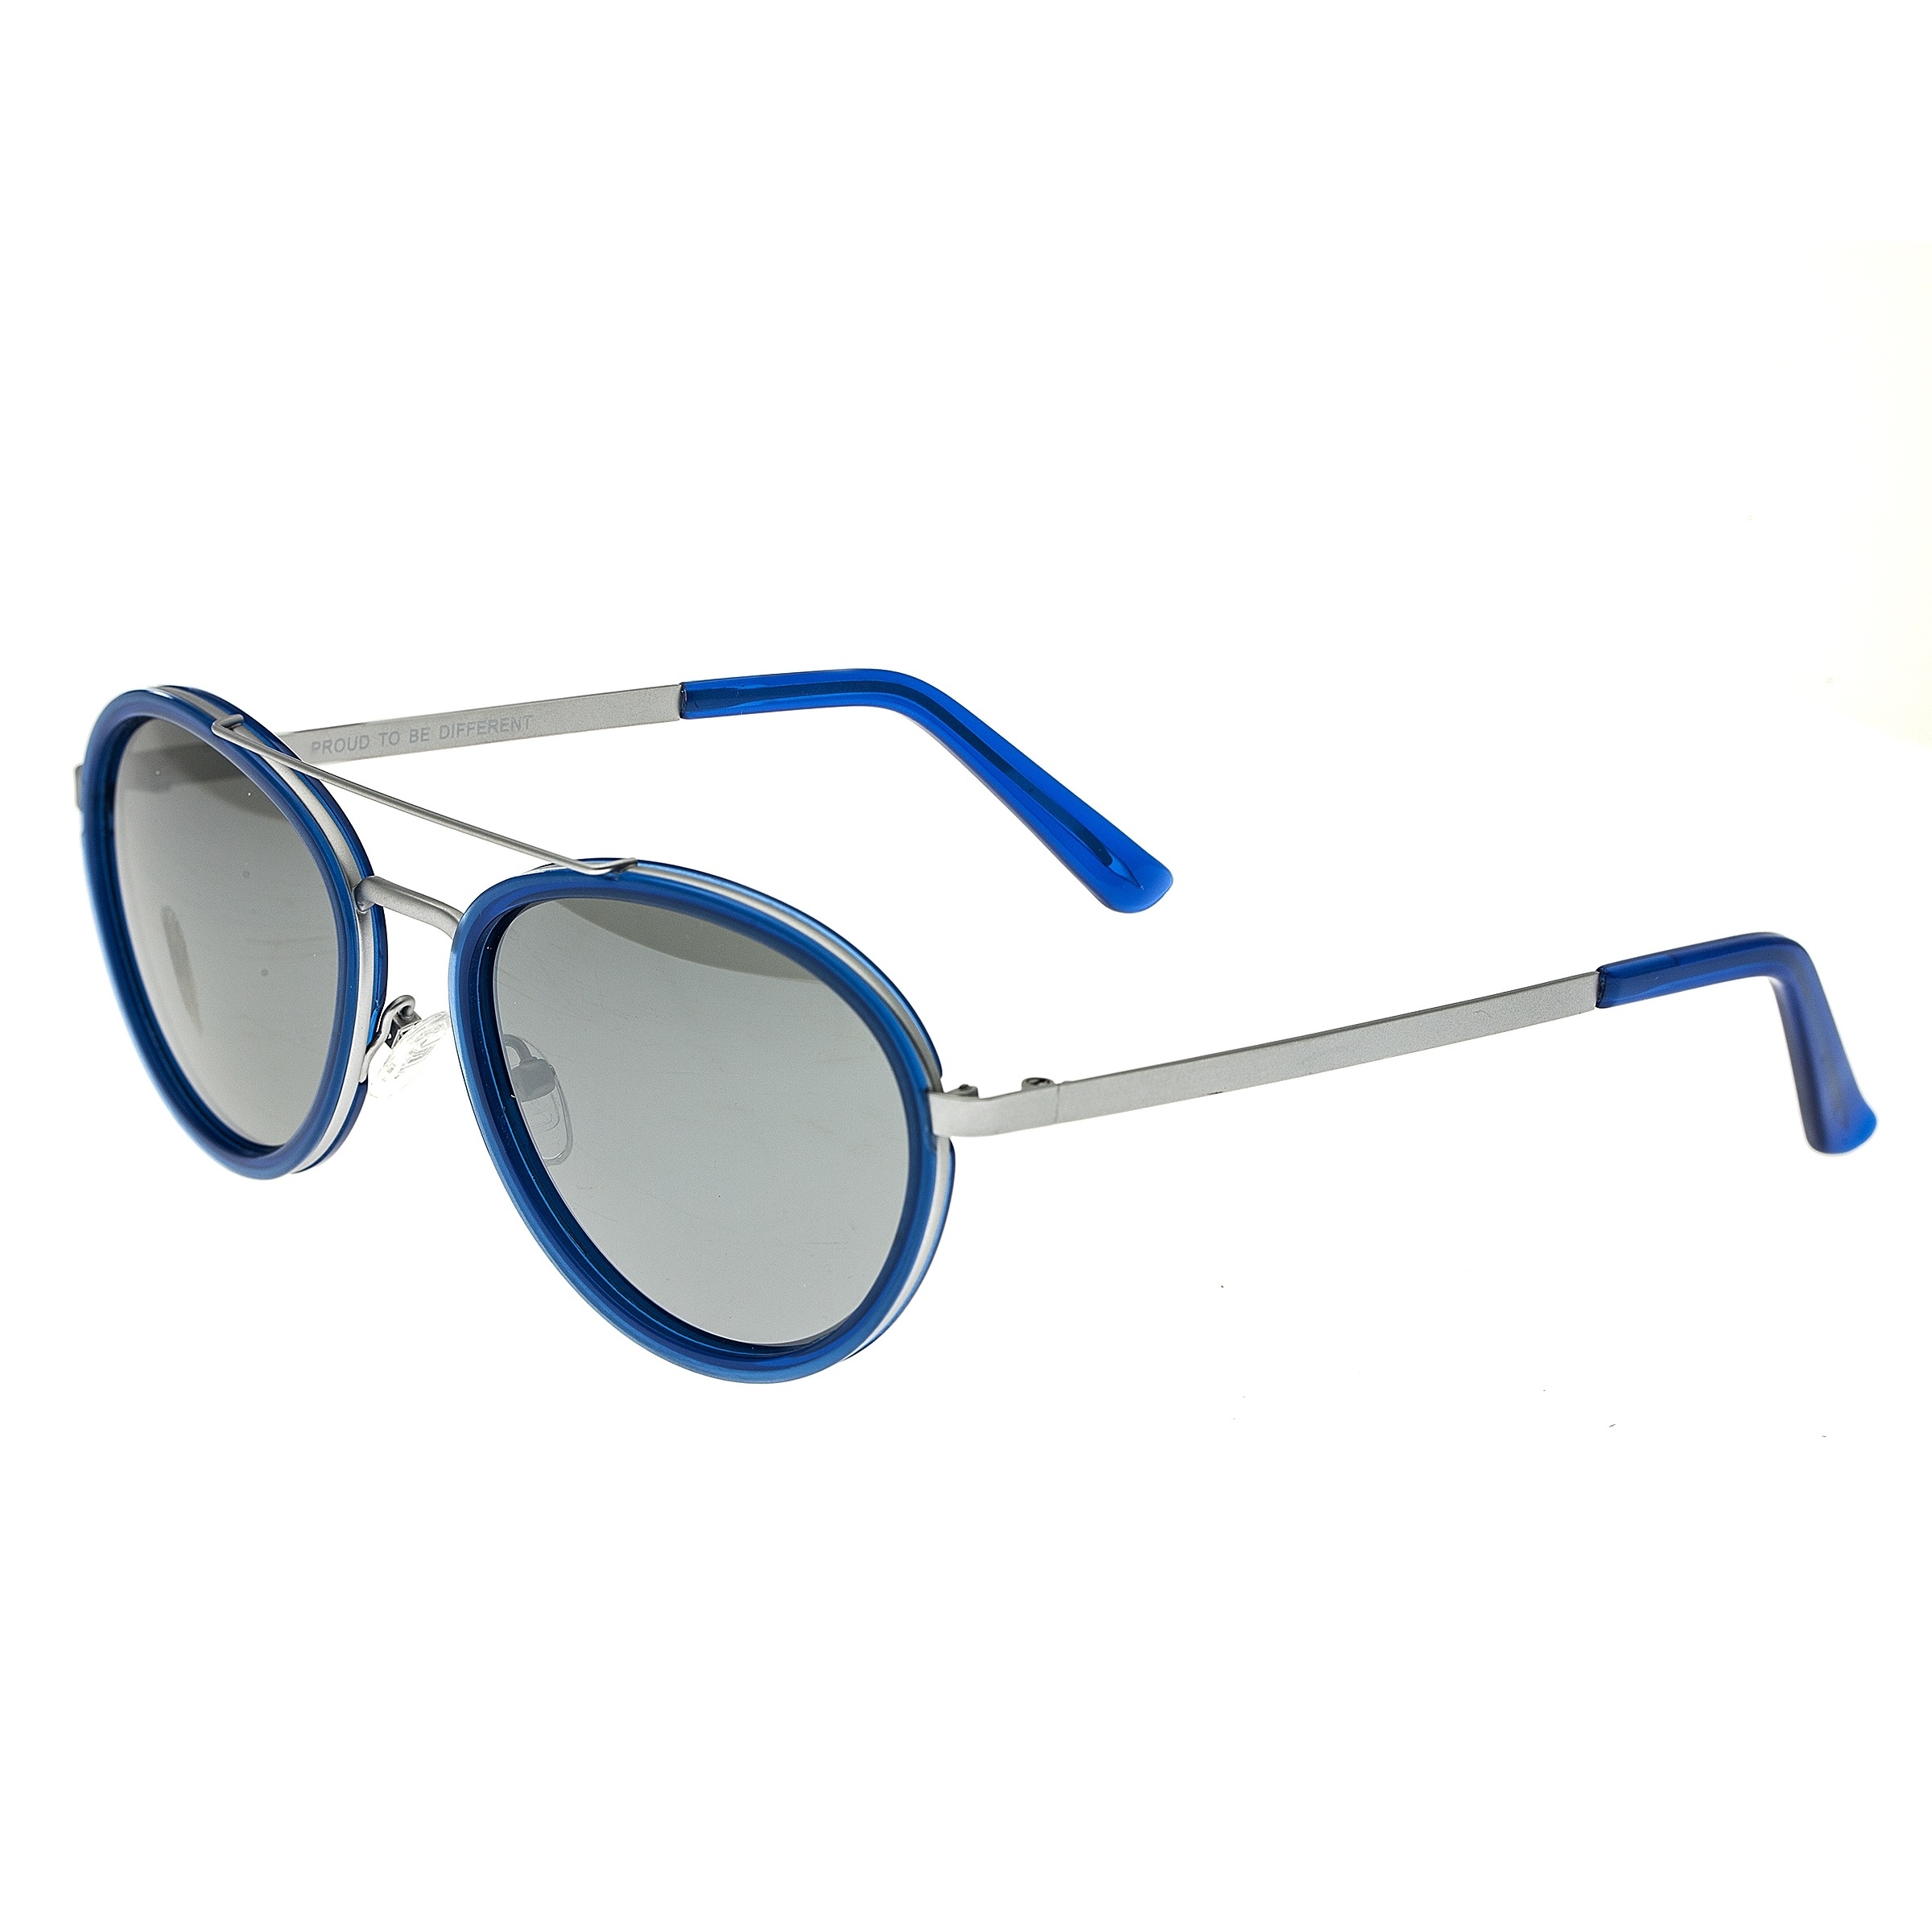 Breed Sunglasses BSG038SL Mens Finlay Sunglasses - Blue - image 4 of 6